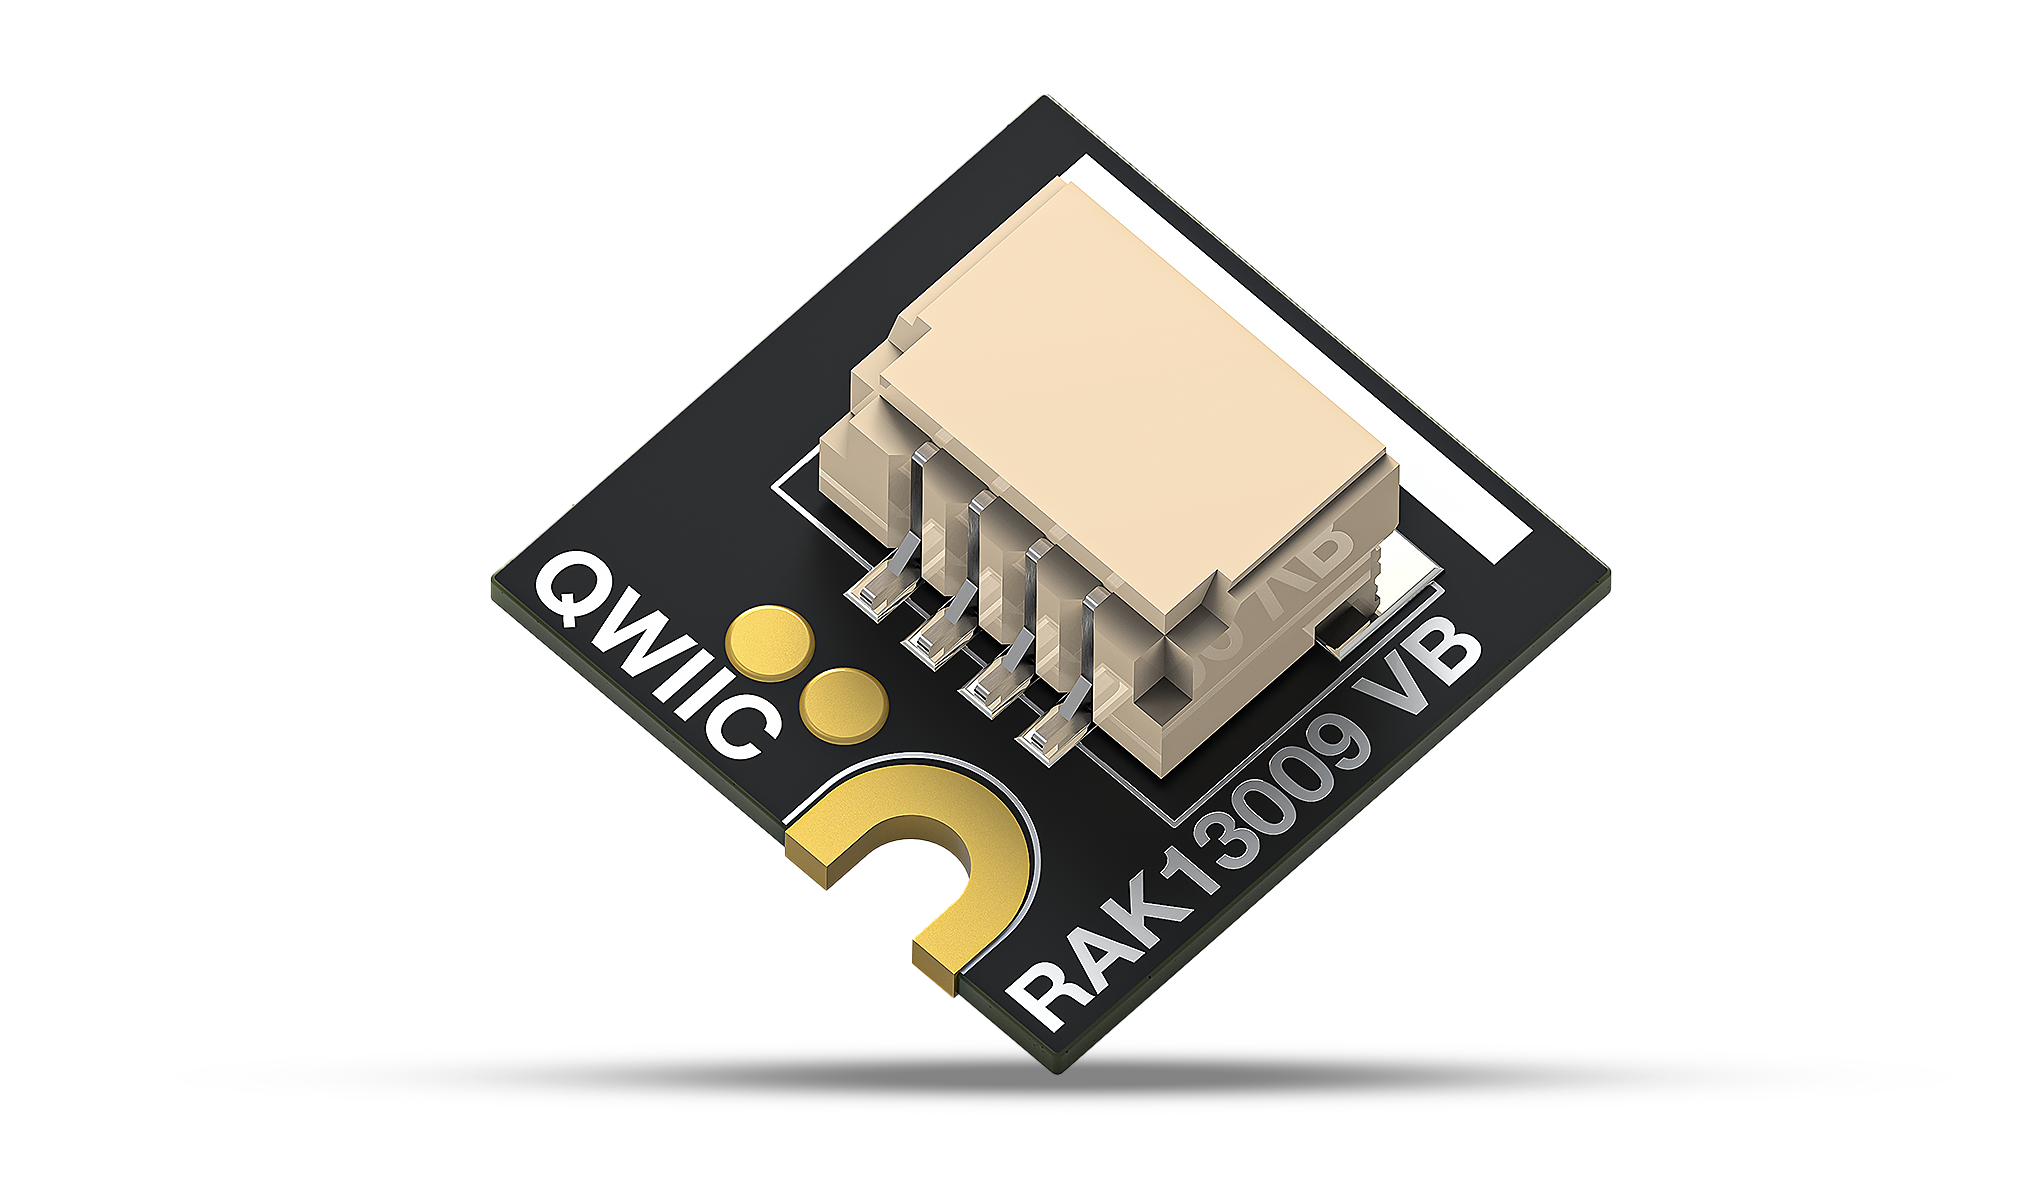 RAK13009, also known as QWIIC Interface